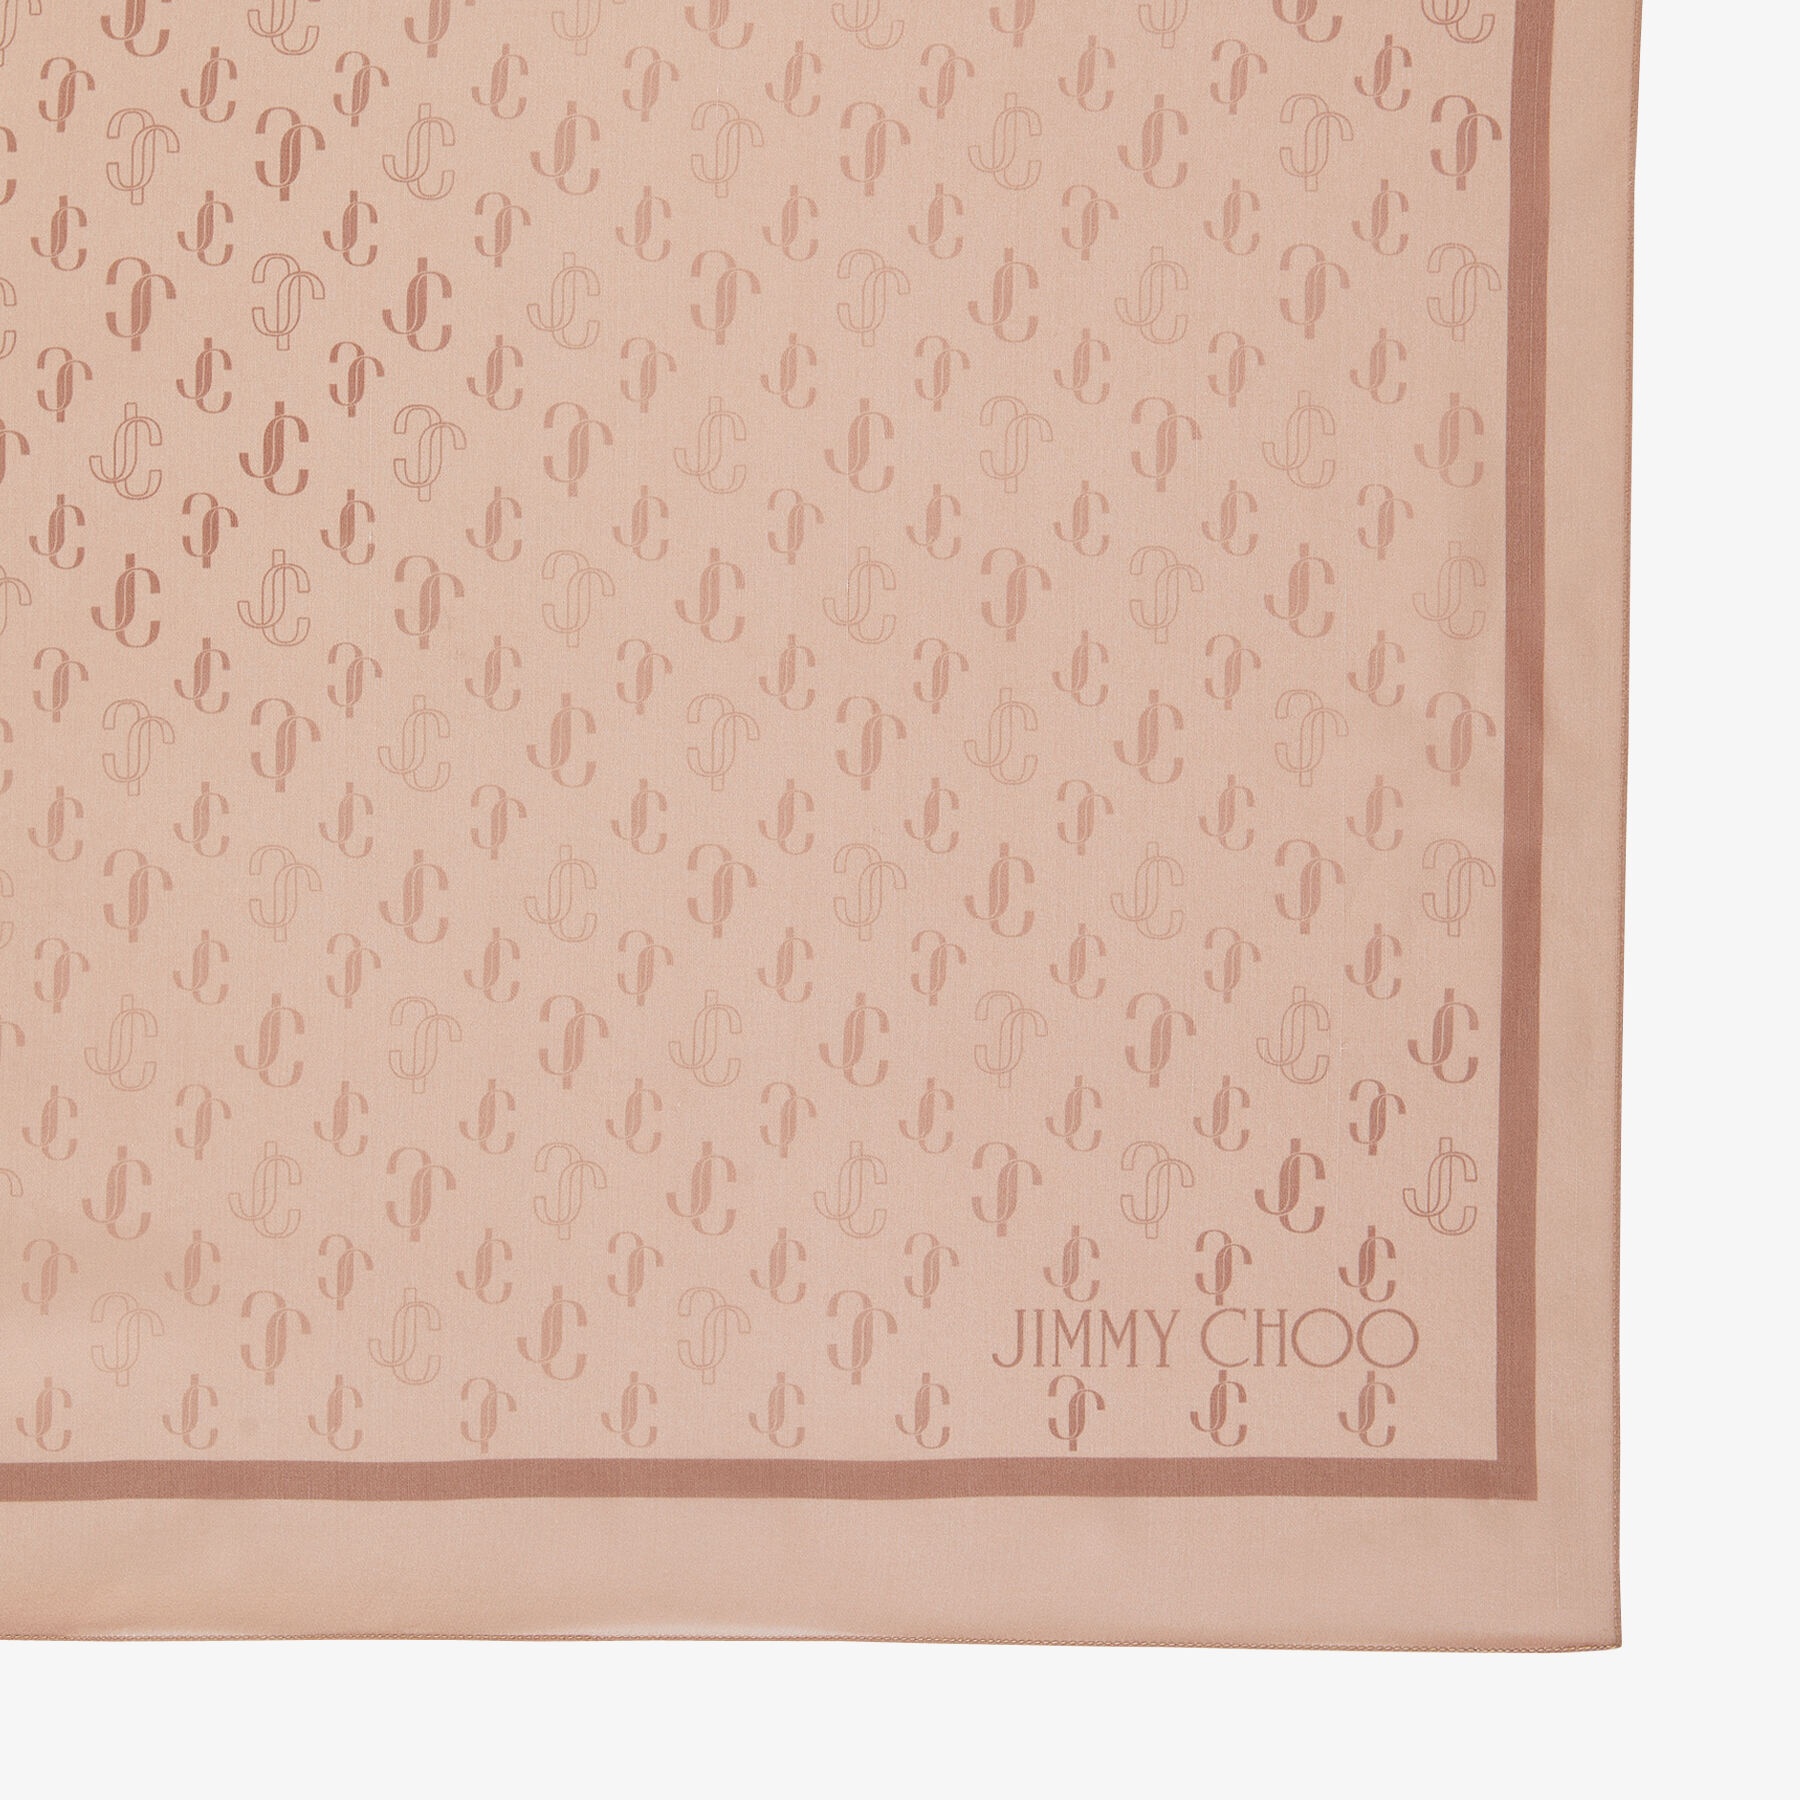 Doris
Ballet Pink Silk Stole with JC Monogram Repeat Print - 3